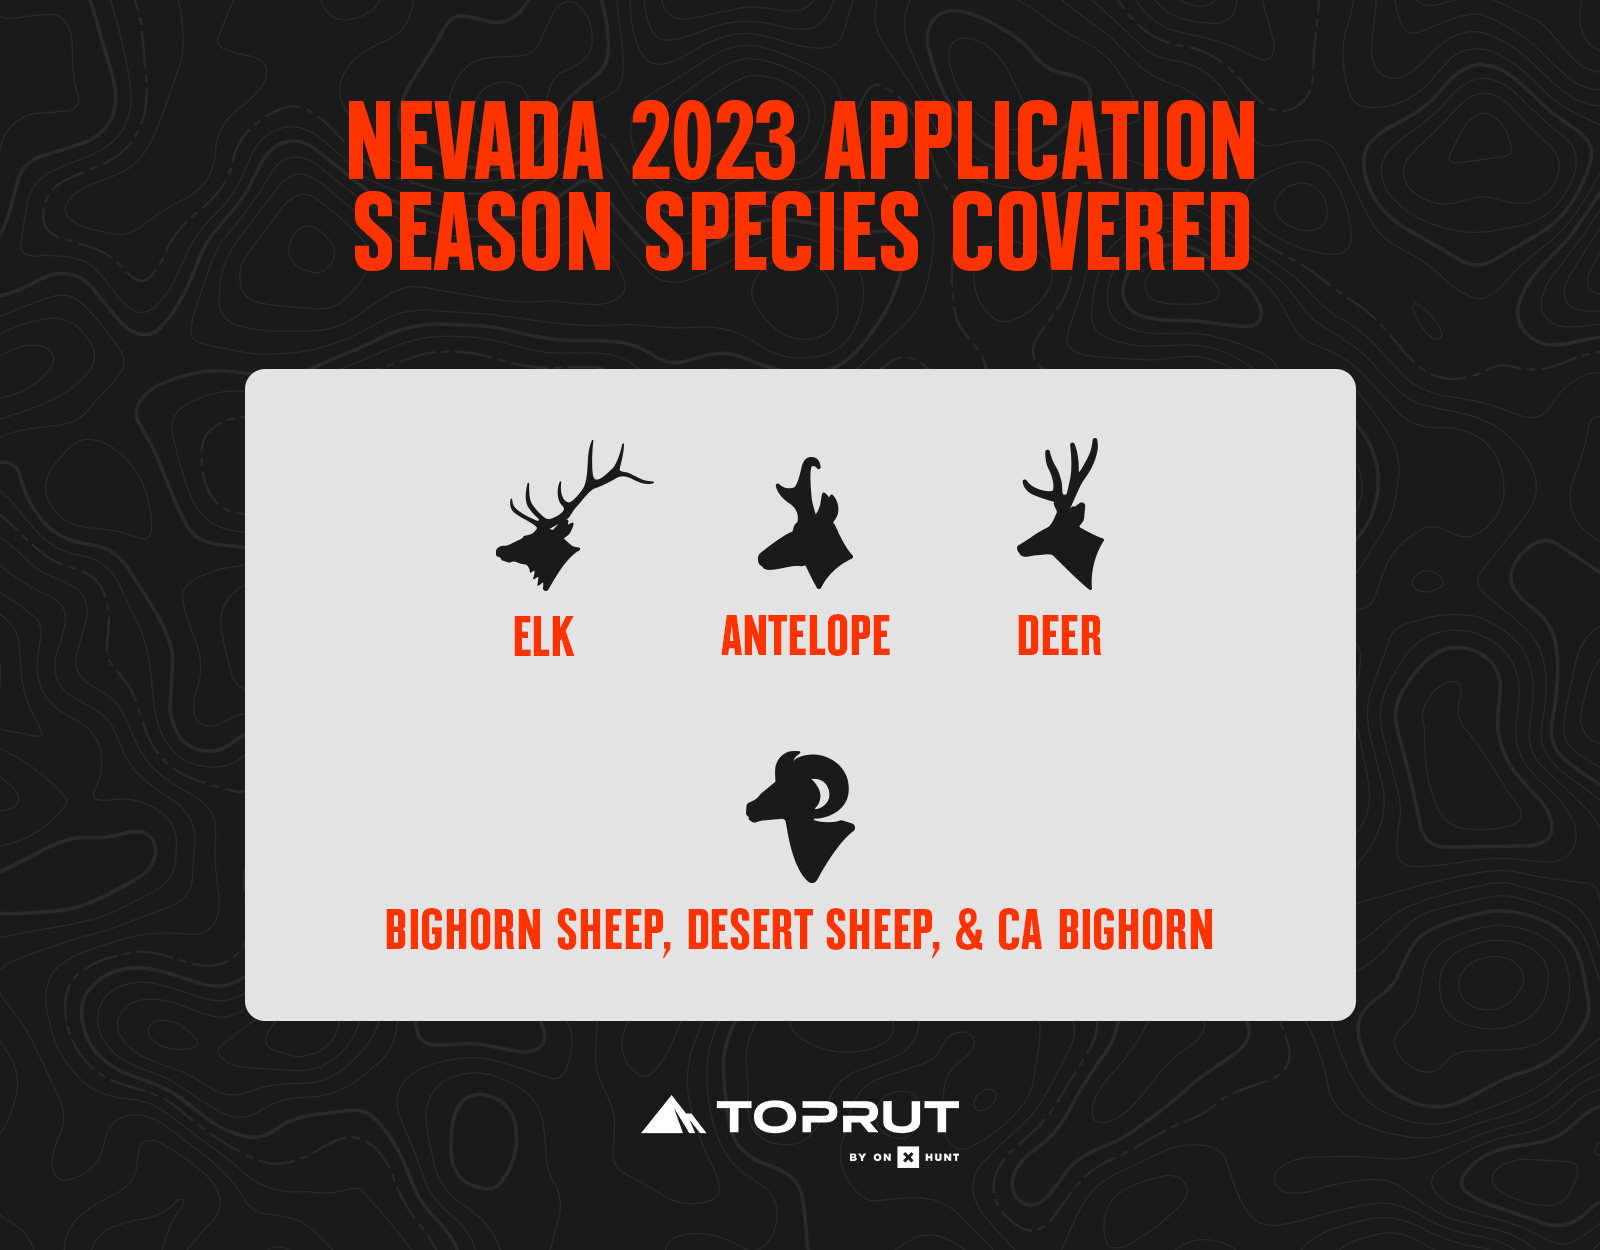 Nevada hunting application season species 